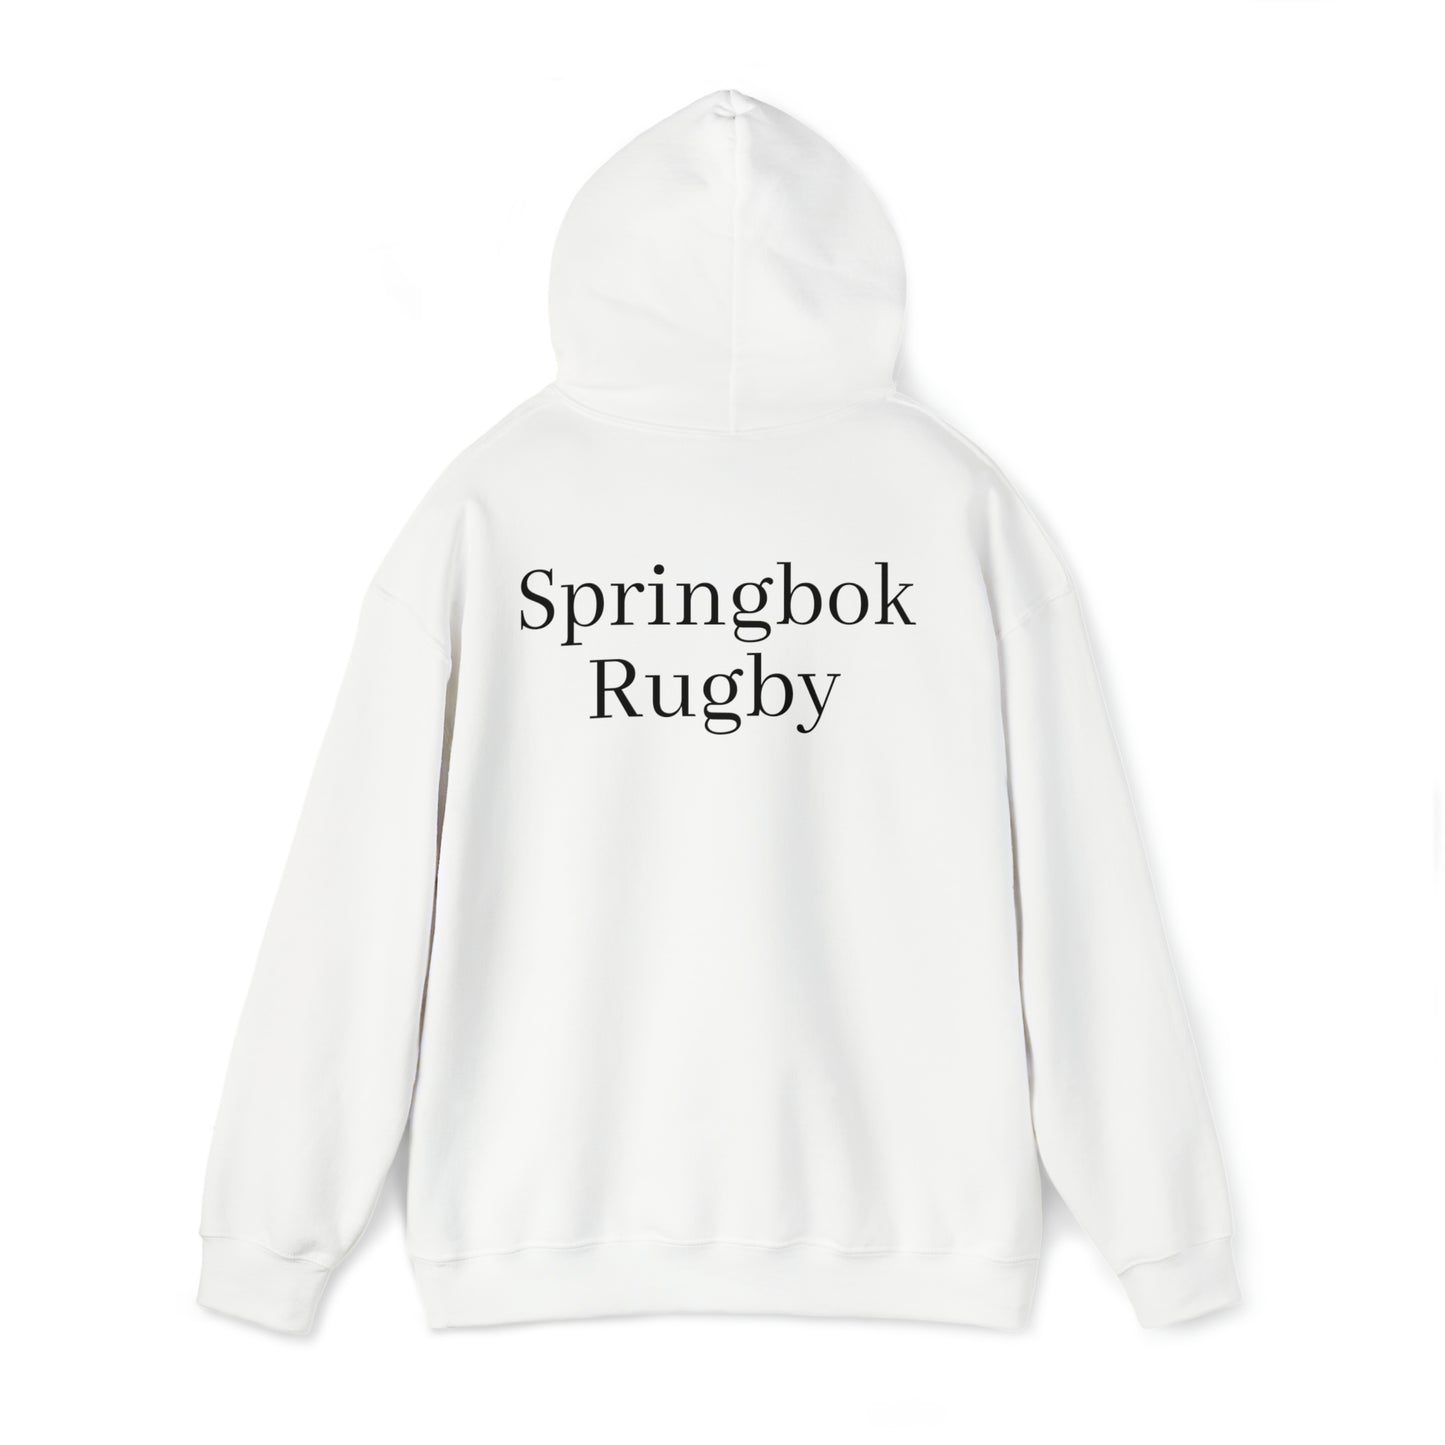 Springboks Celebrating with RWC - light hoodies